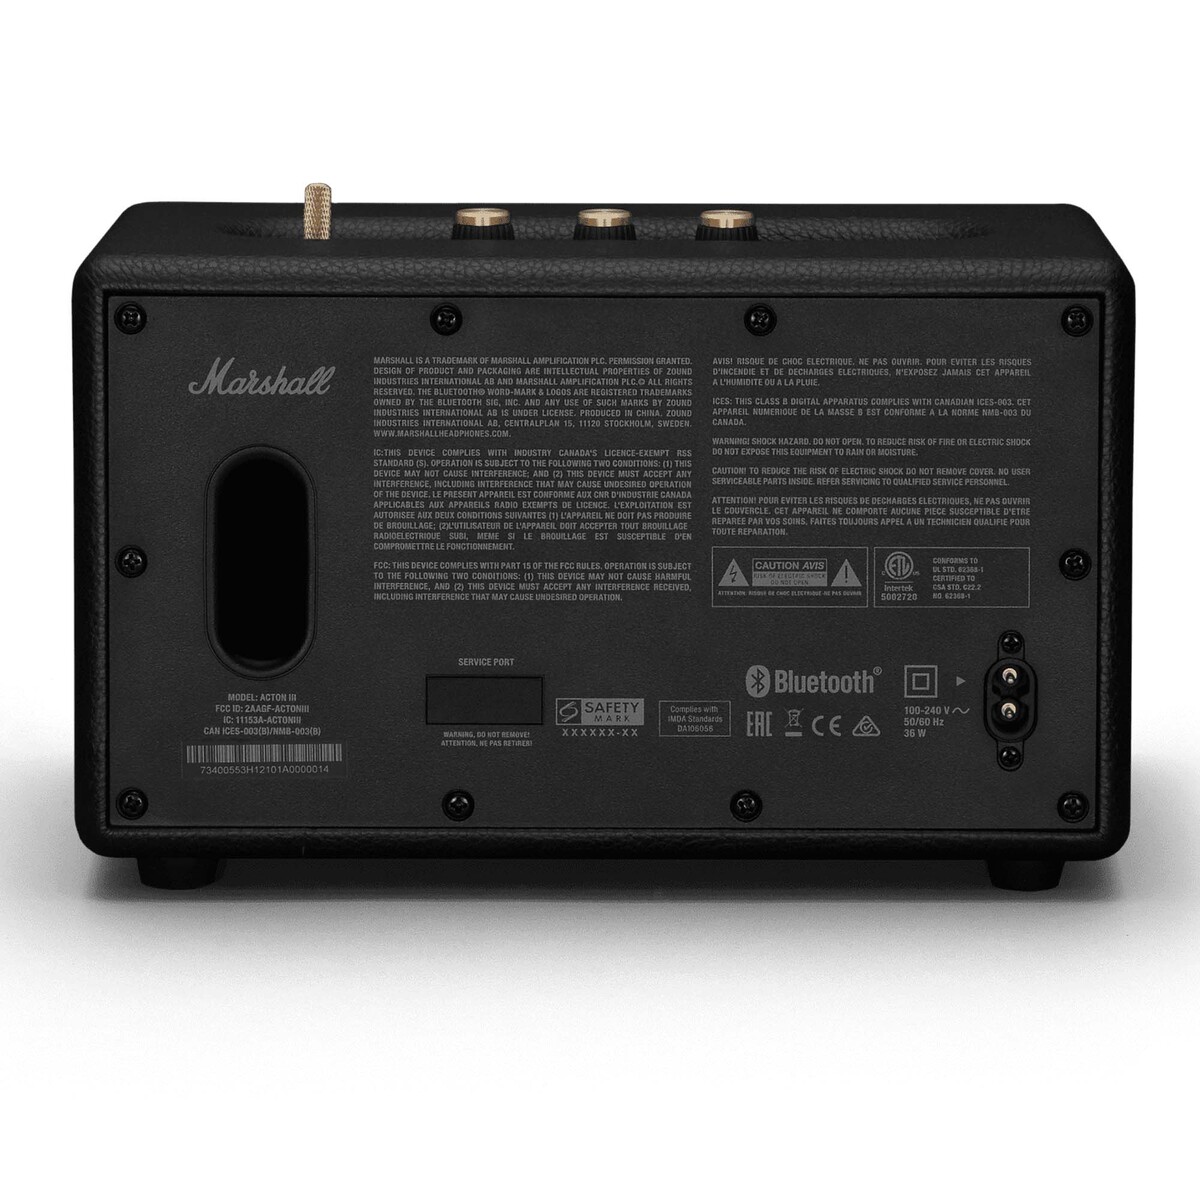 Buy Marshall Acton III Wireless Stereo Speaker online in uae